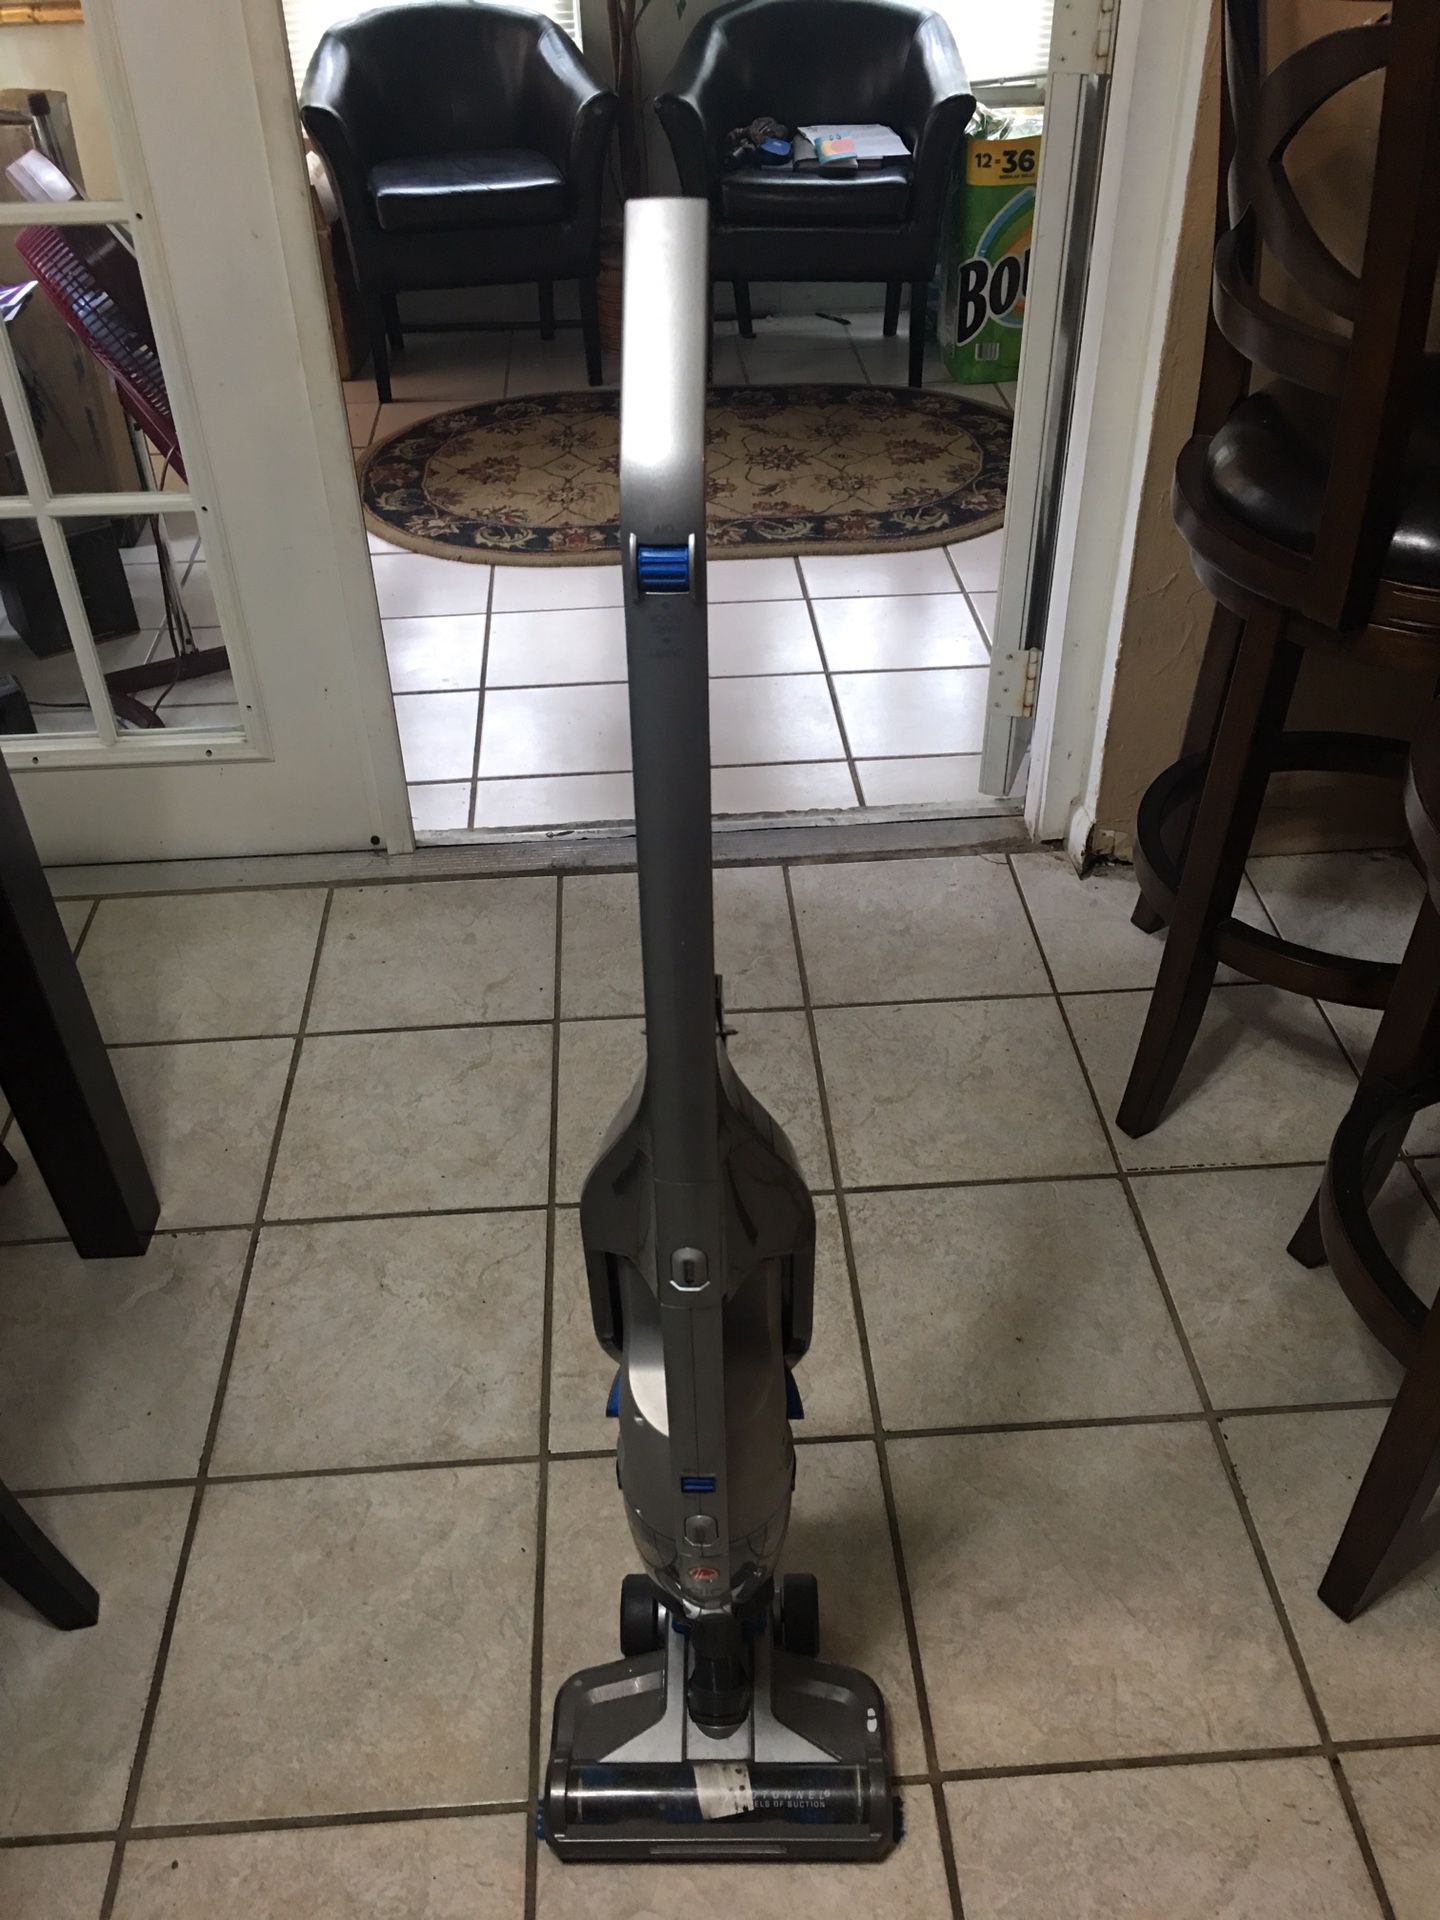 Hoover air cordless 2in 1 vacuum